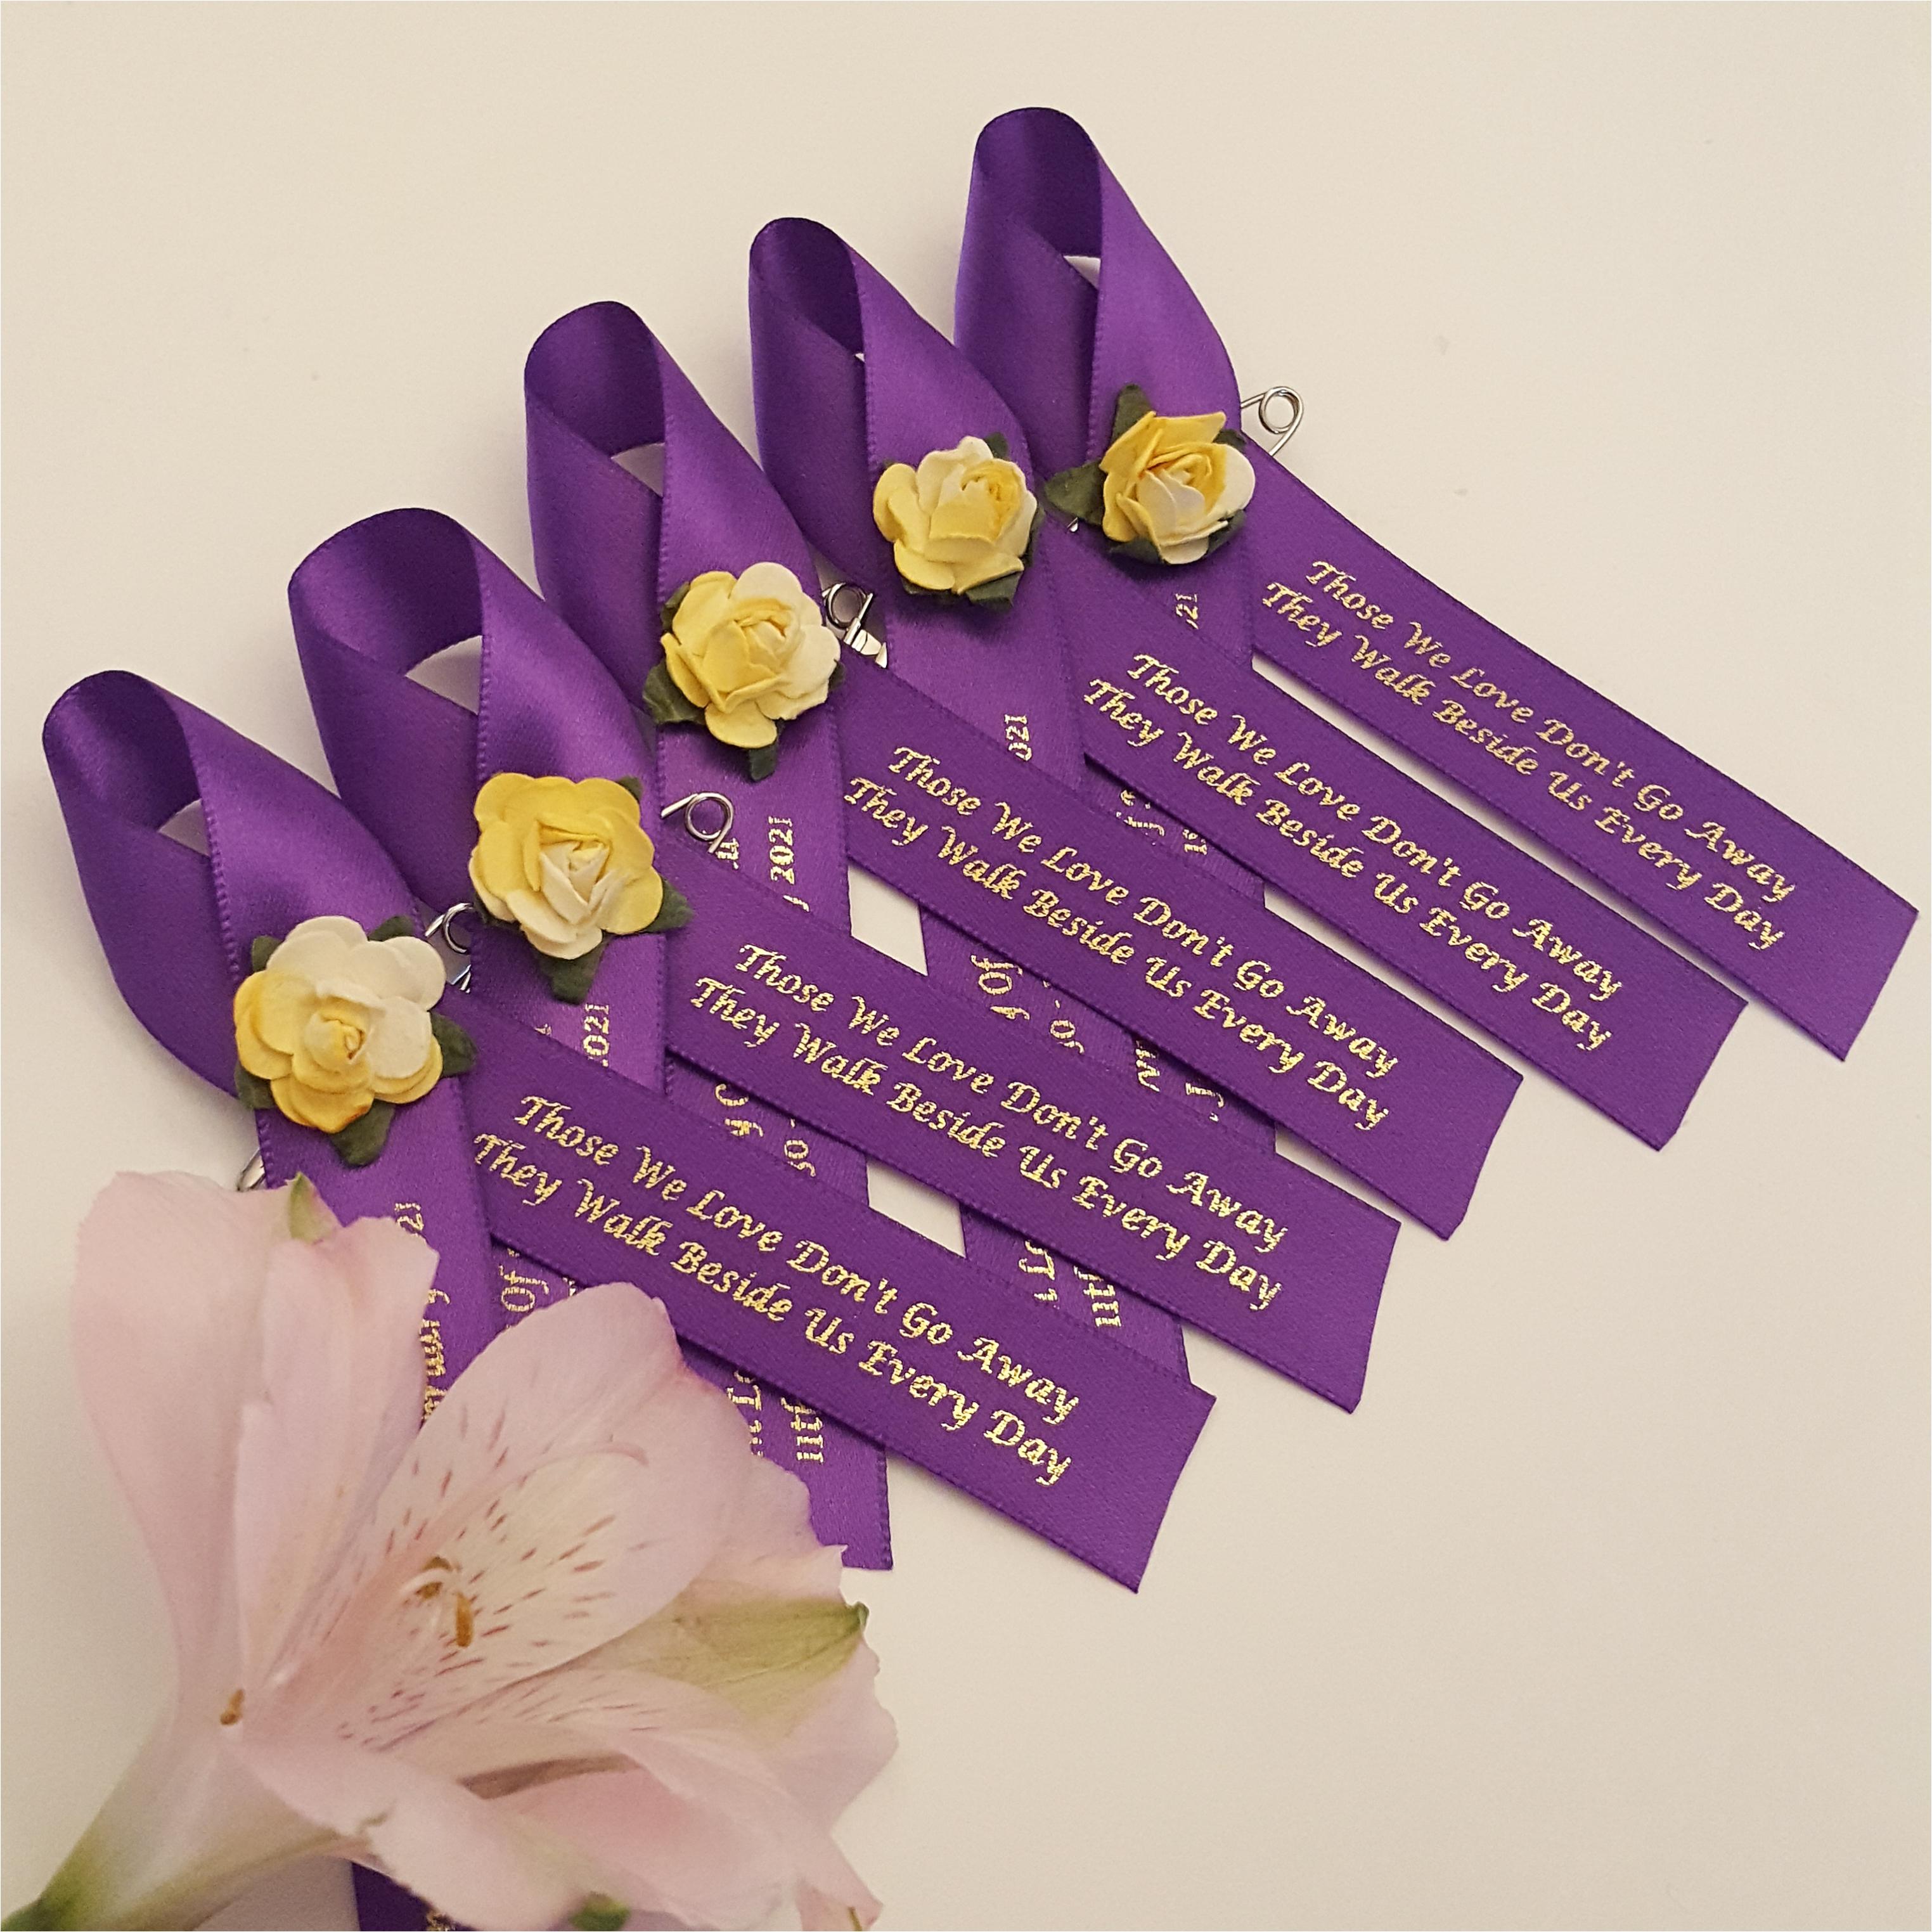 Purple funeral ribbons